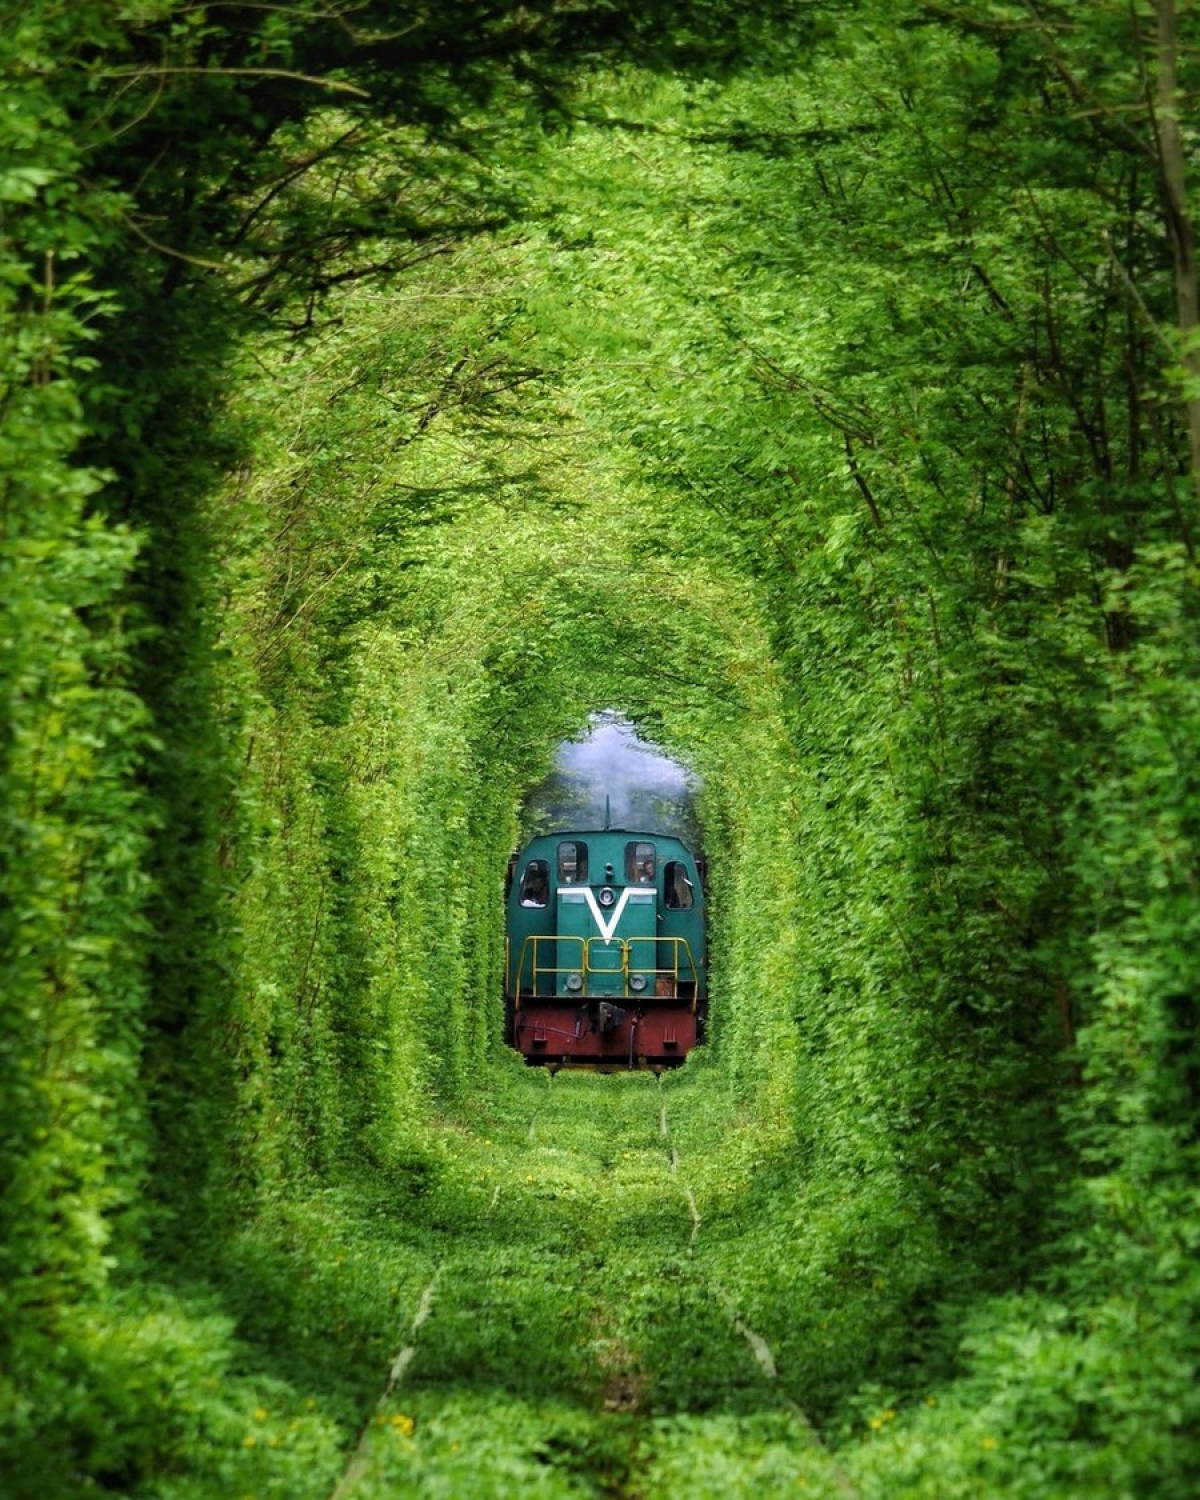 General 1200x1500 portrait display plants overgrown leaves Tunnel of Love tunnel railway locomotive diesel locomotive train trees green